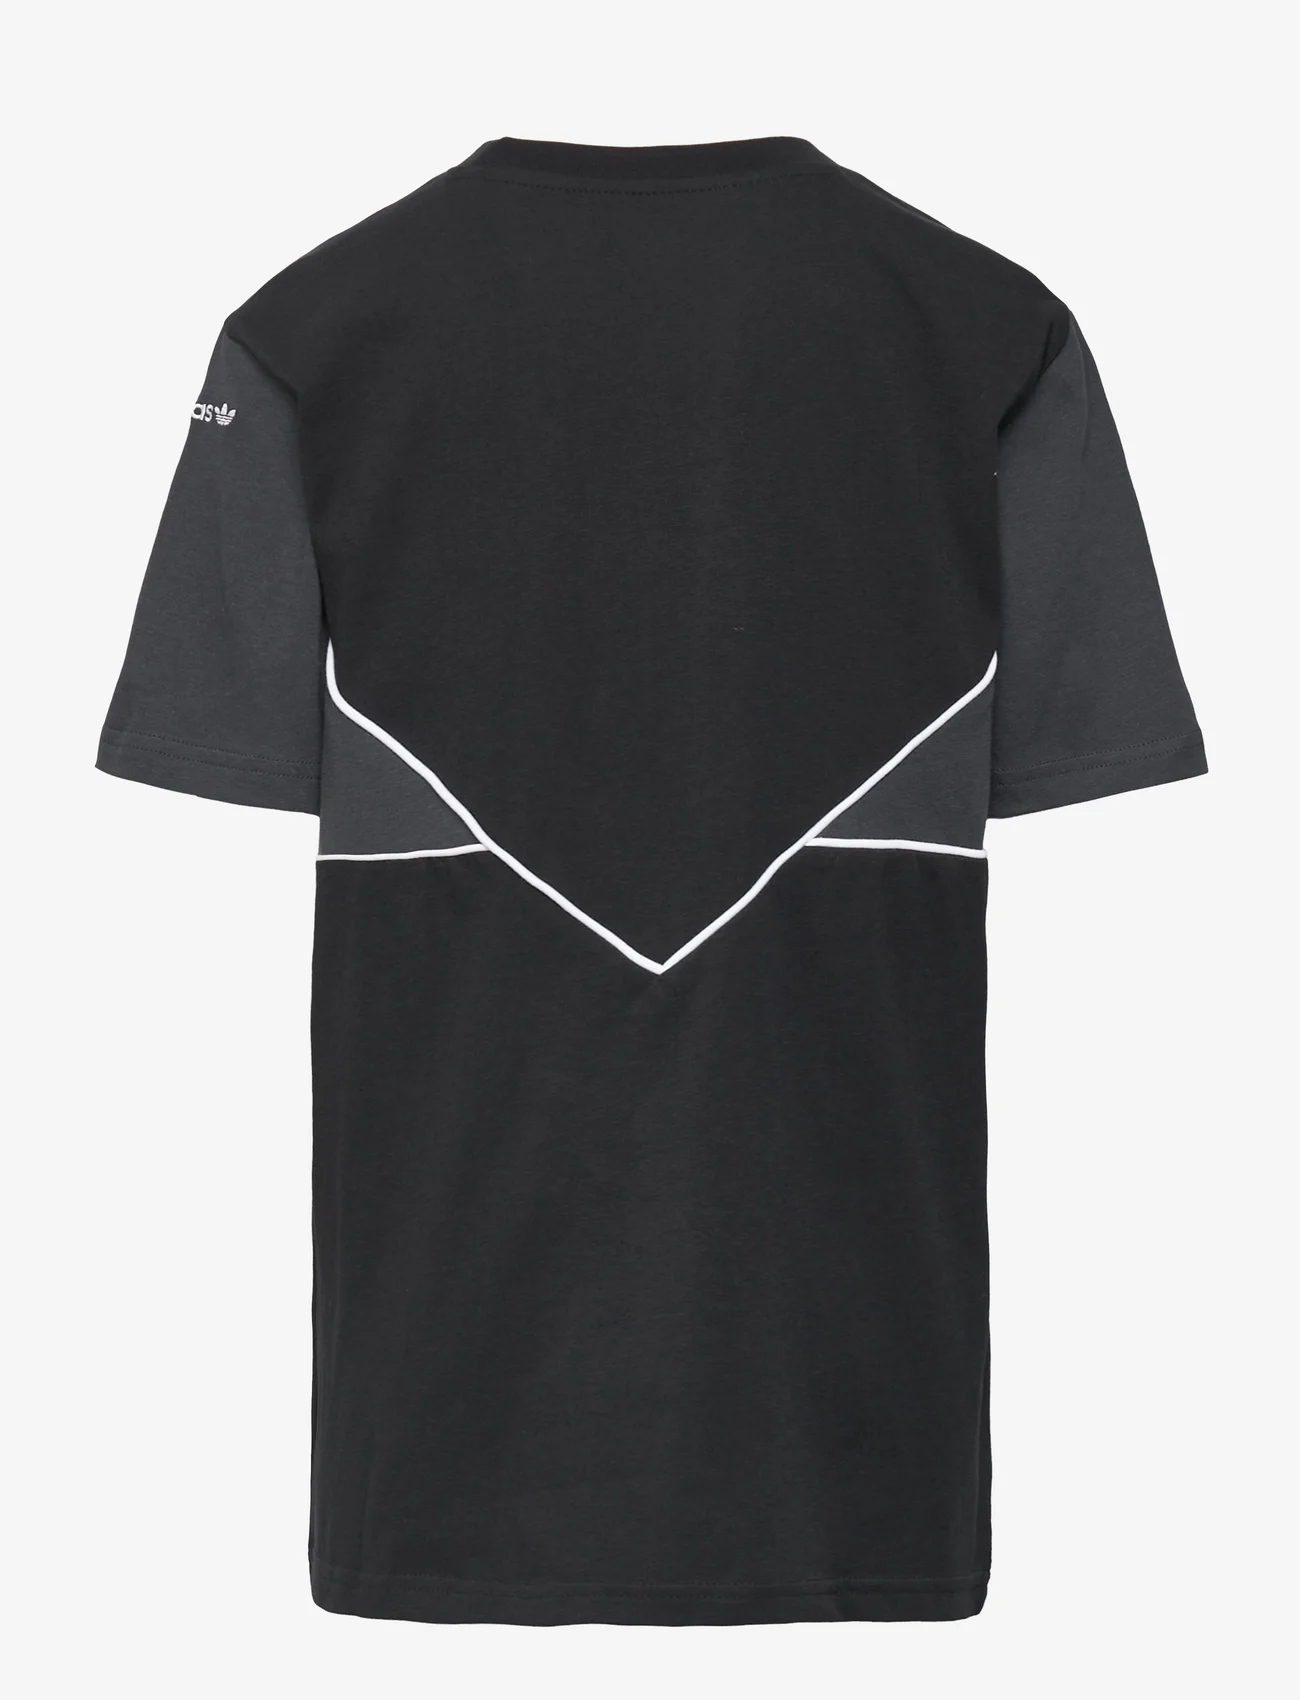 adidas Originals - Adicolor T-Shirt - kortermede t-skjorter - black/carbon - 1